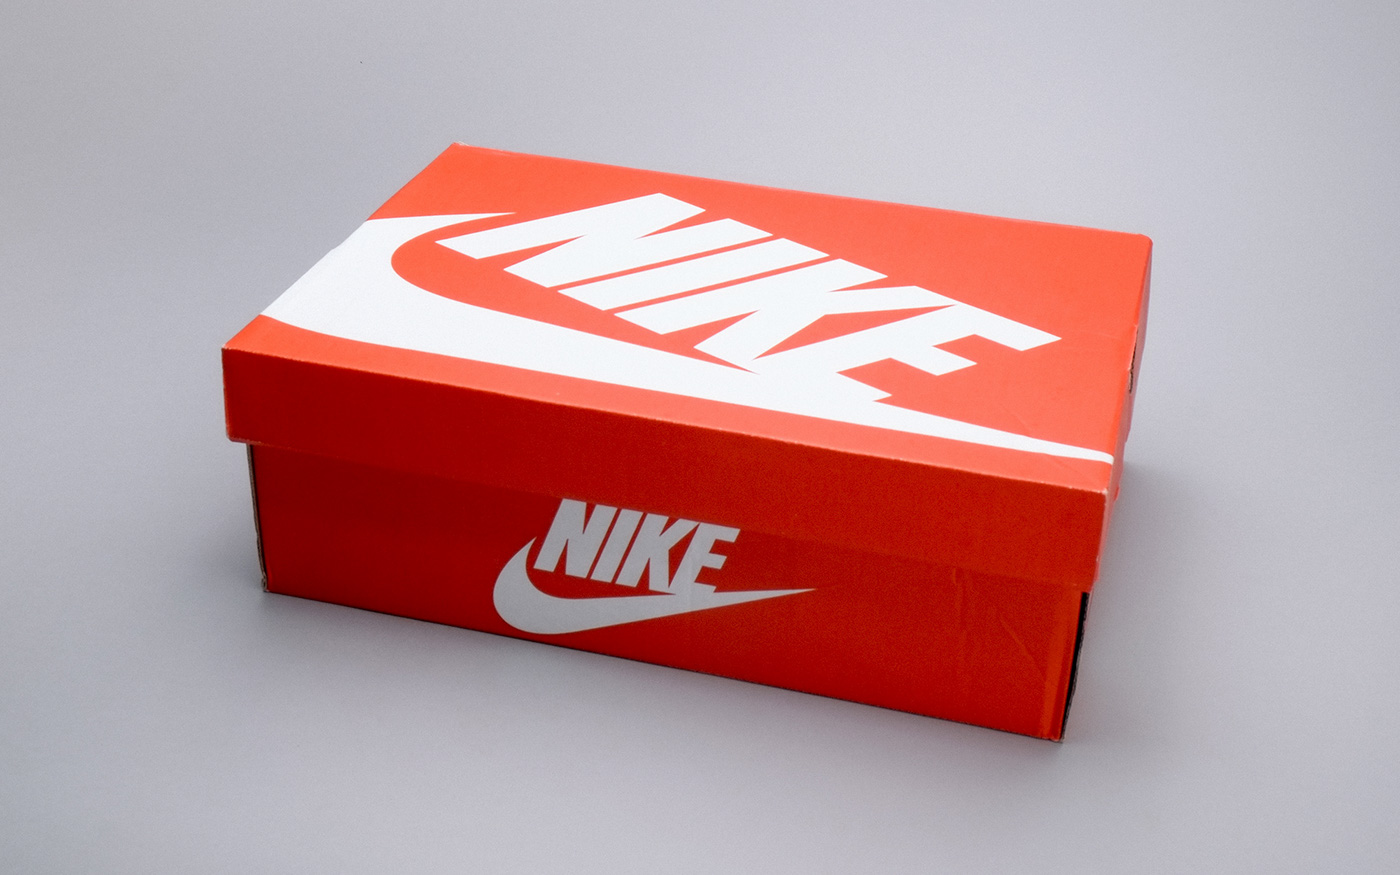 nike shoe box logo